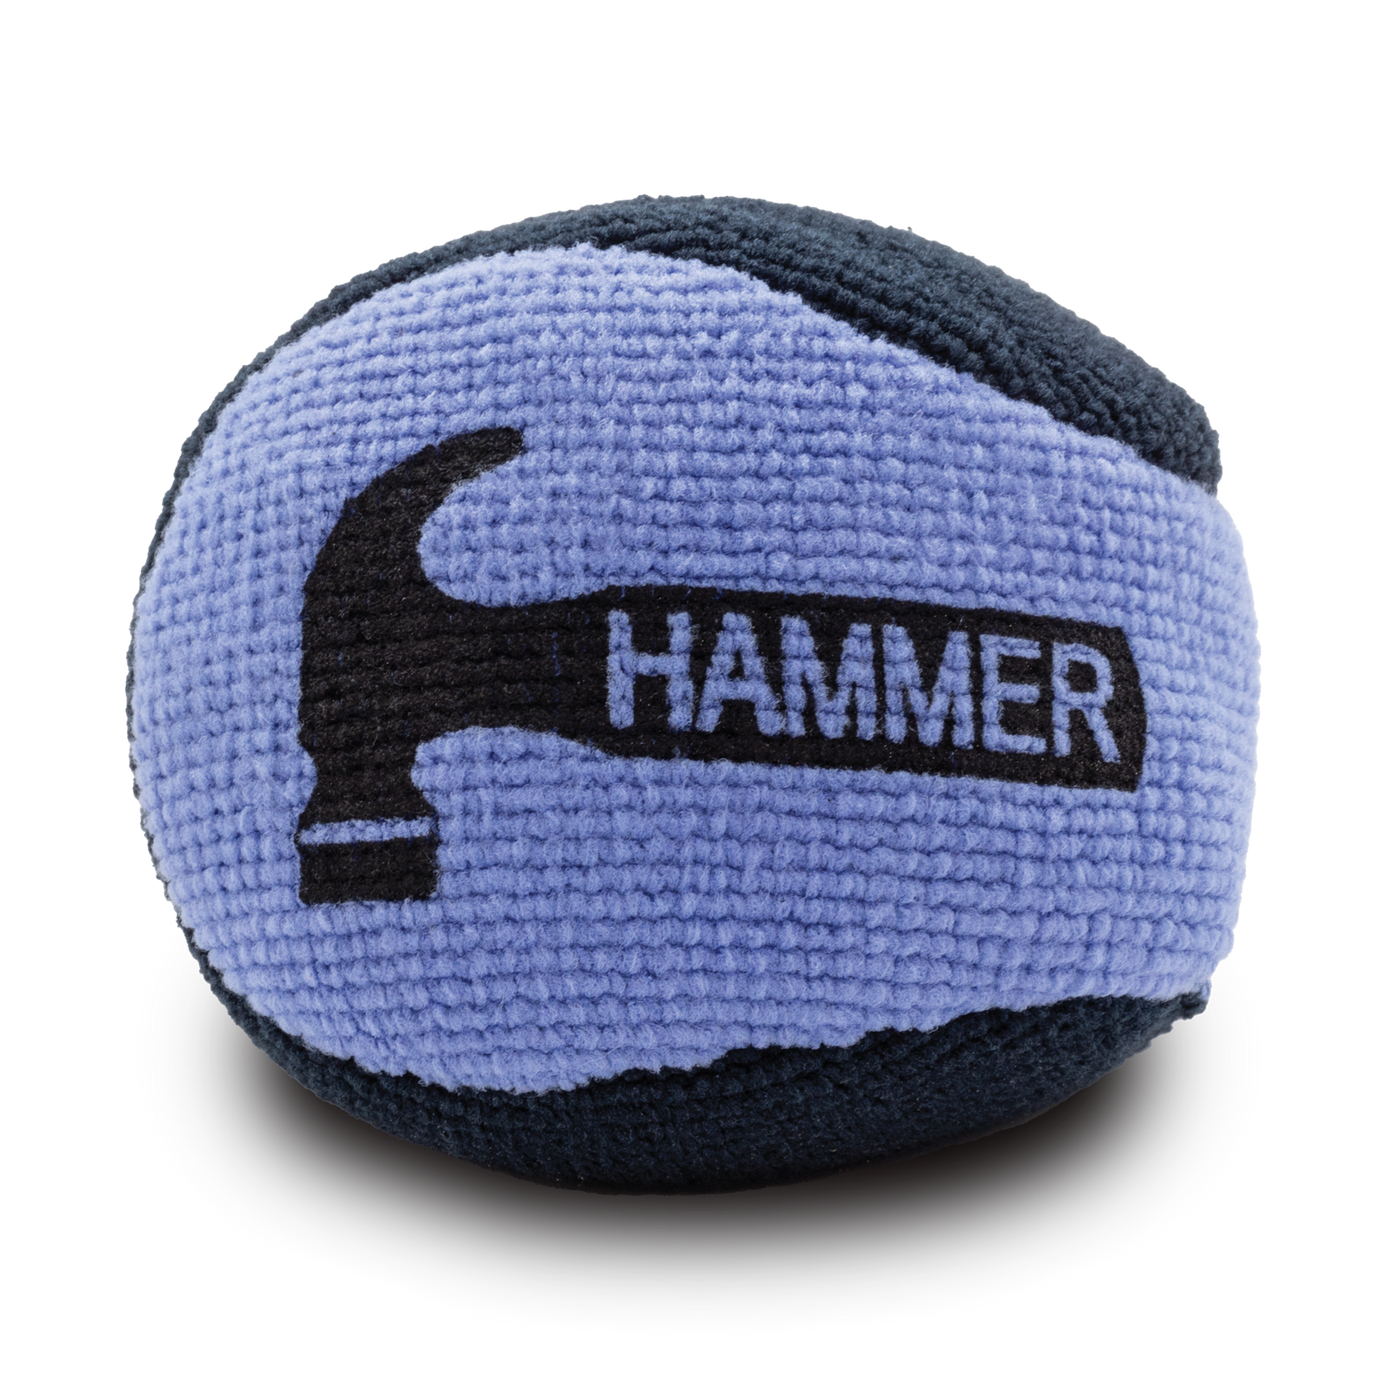 Hammer Large Grip Ball back side with Hammer logo